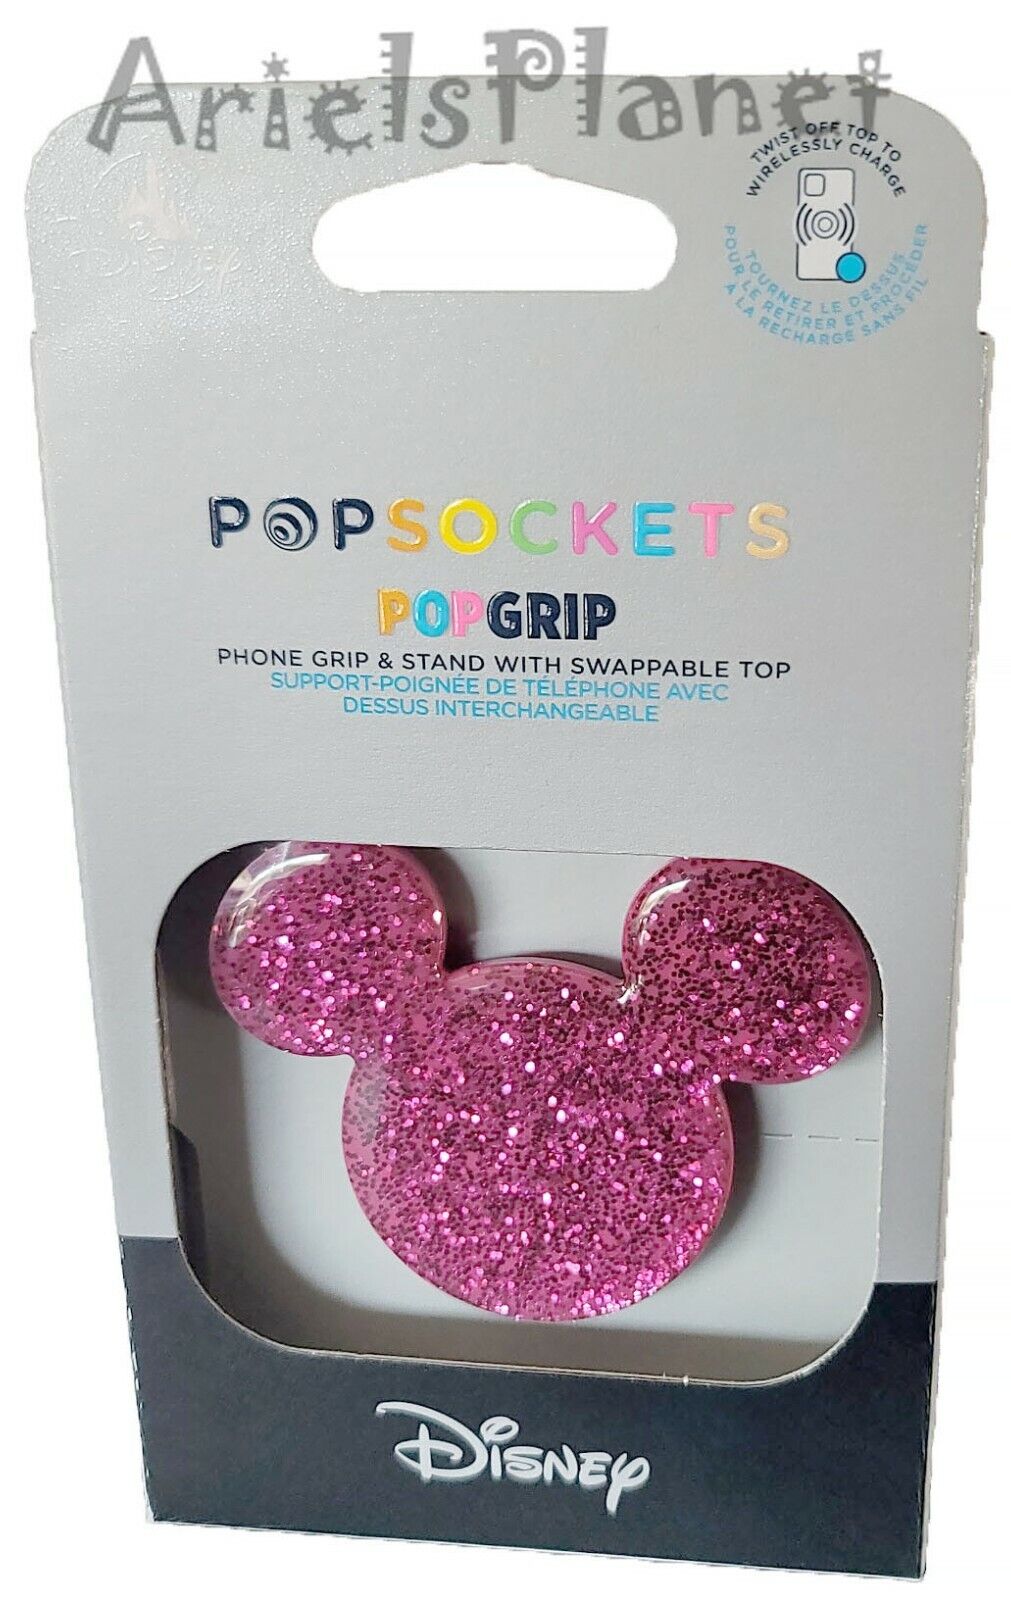 Walt Disney World Parks Mickey Ear Earidescent Pink Glitter PopGrip Popsocket